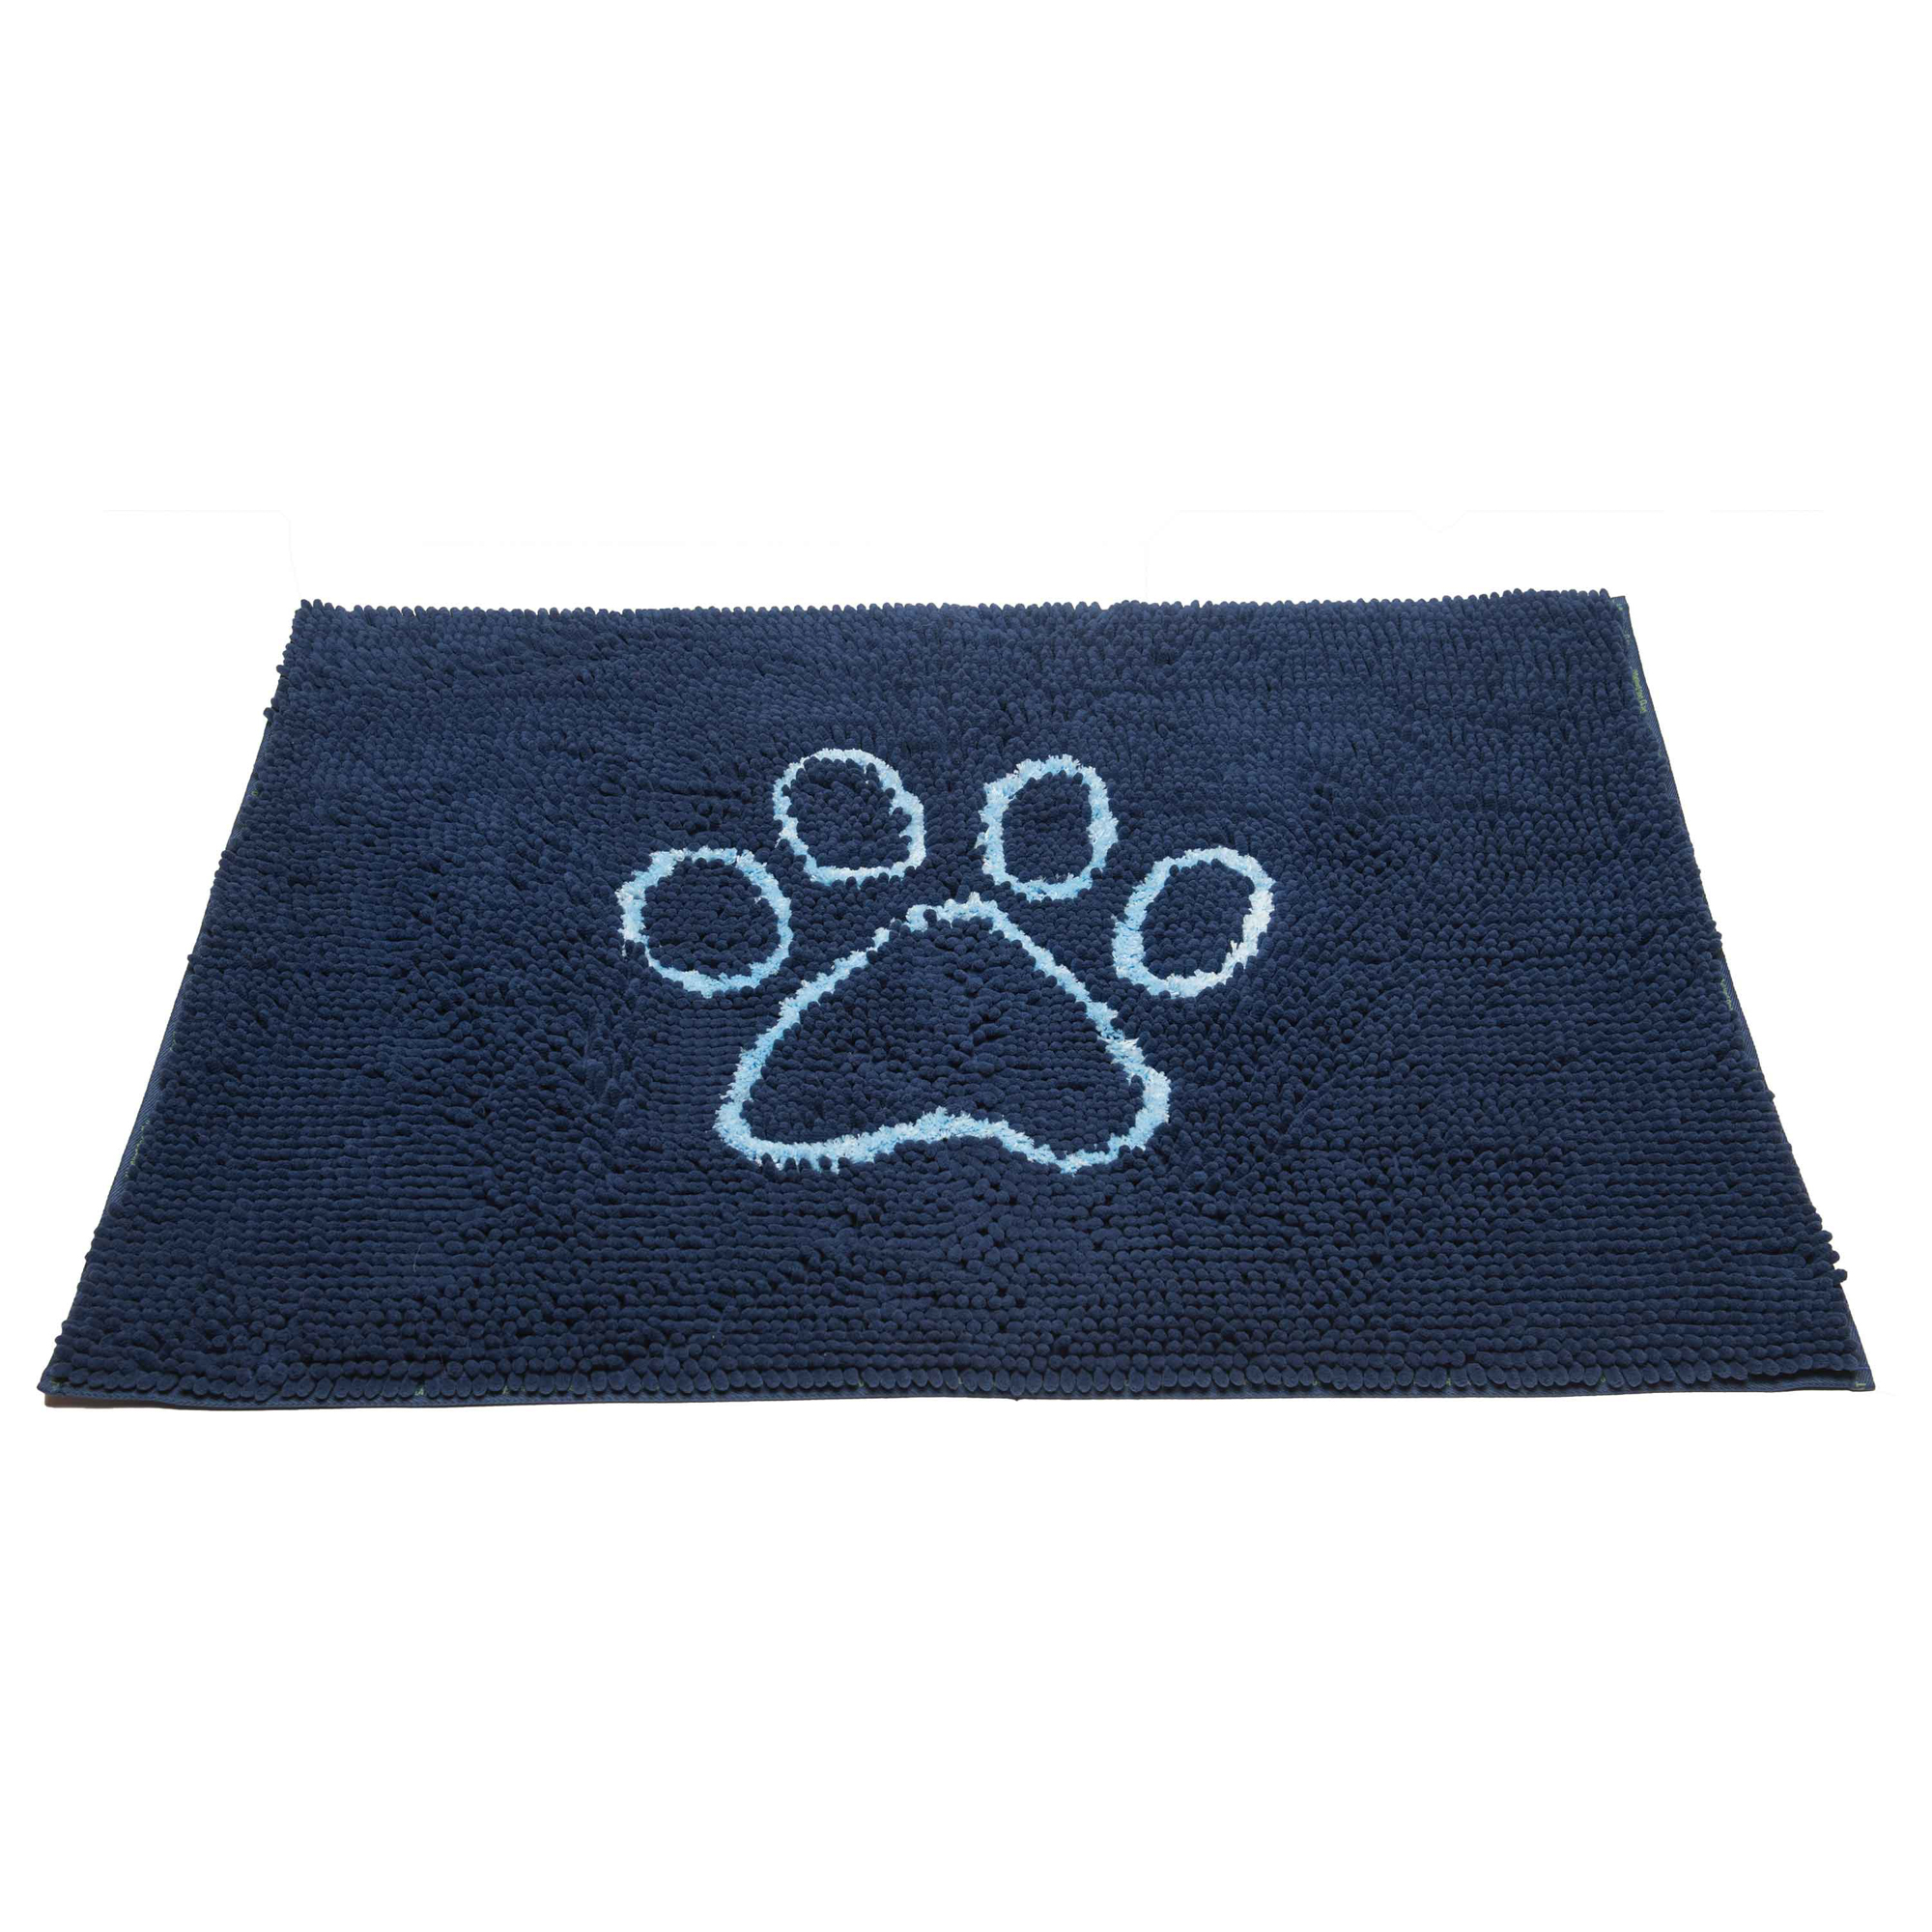 Dirty Dog Doormats Usage